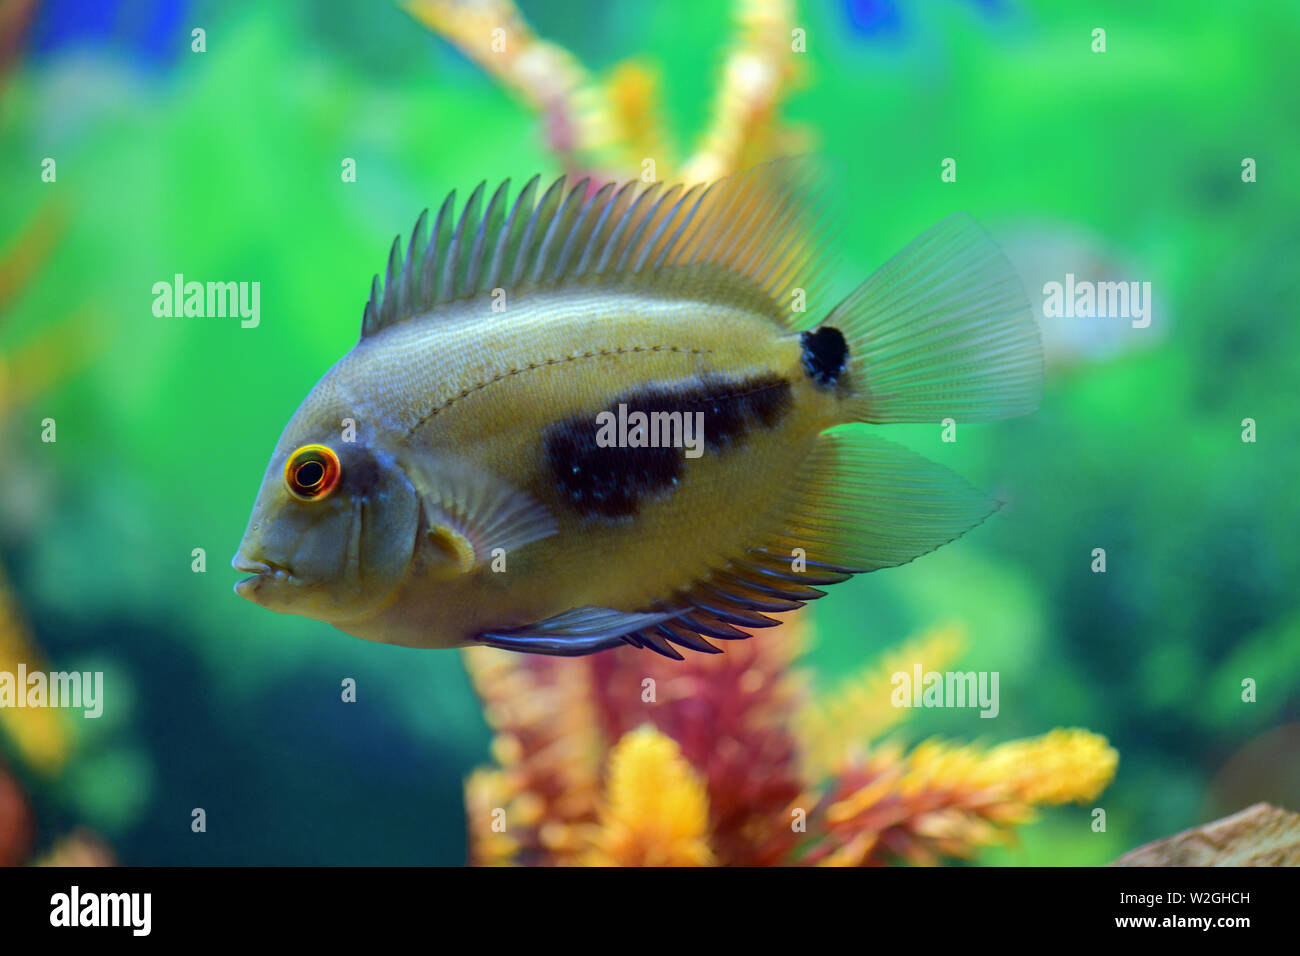 Uaru amphiacanthoide  black-spotted fish swims in a transparent aquarium with a beautiful bright design Stock Photo